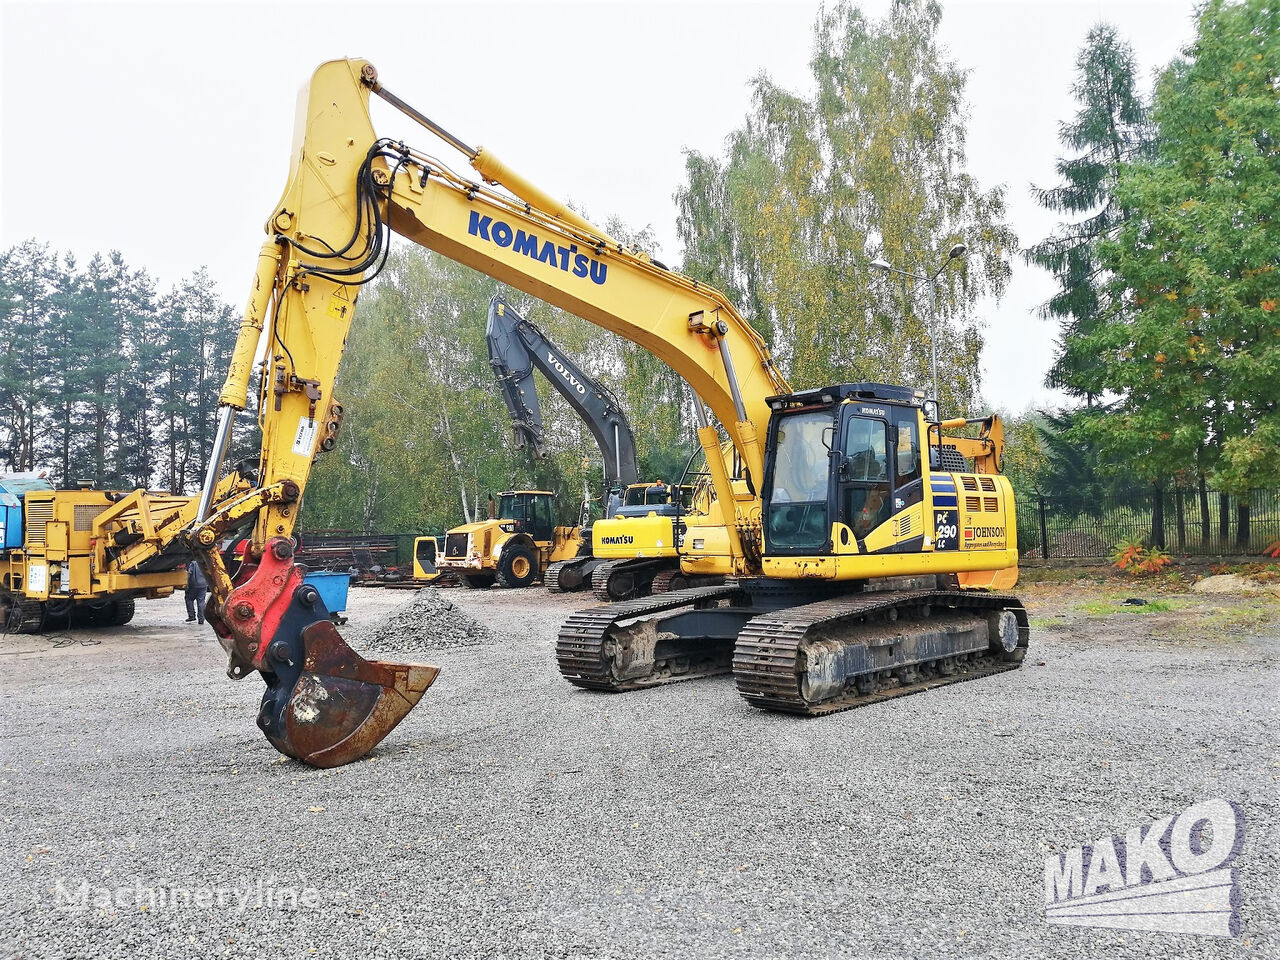 KOMATSU PC290 LC-10 tracked excavator